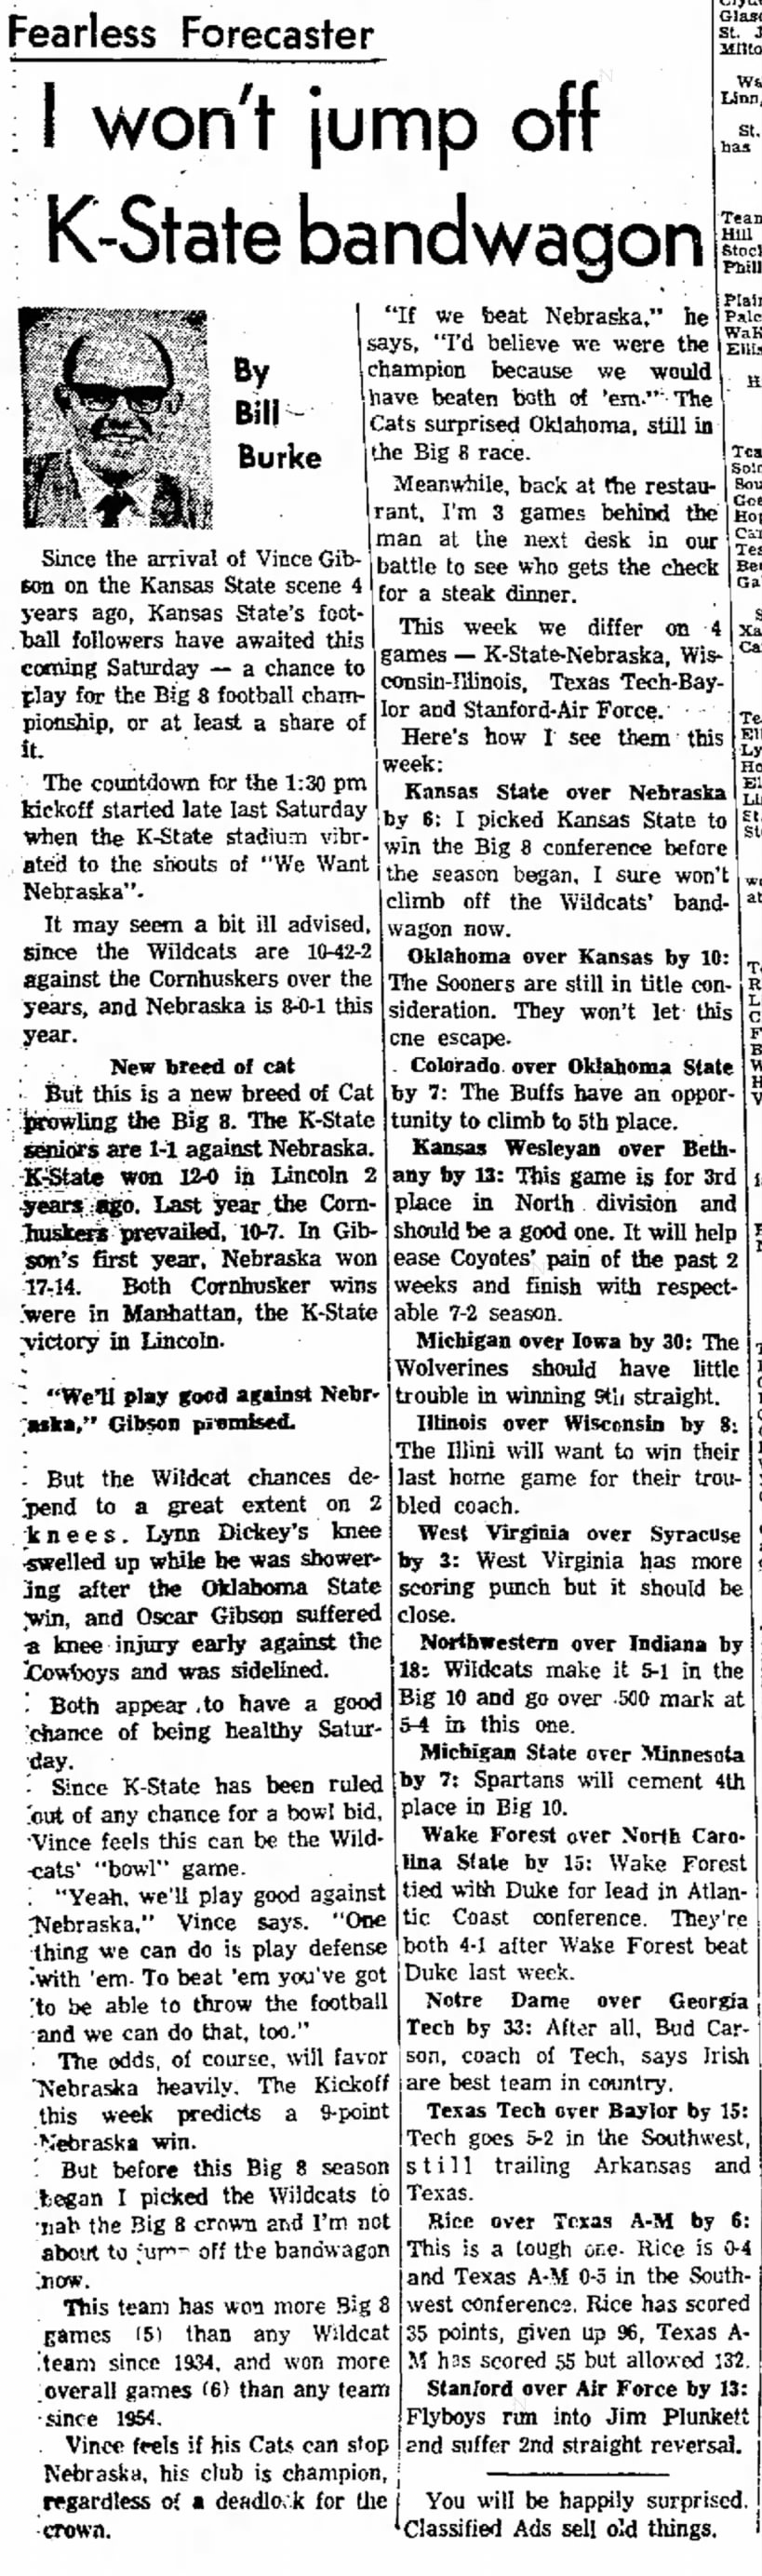 1970 Kansas State-Nebraska prediction, Salina Journal